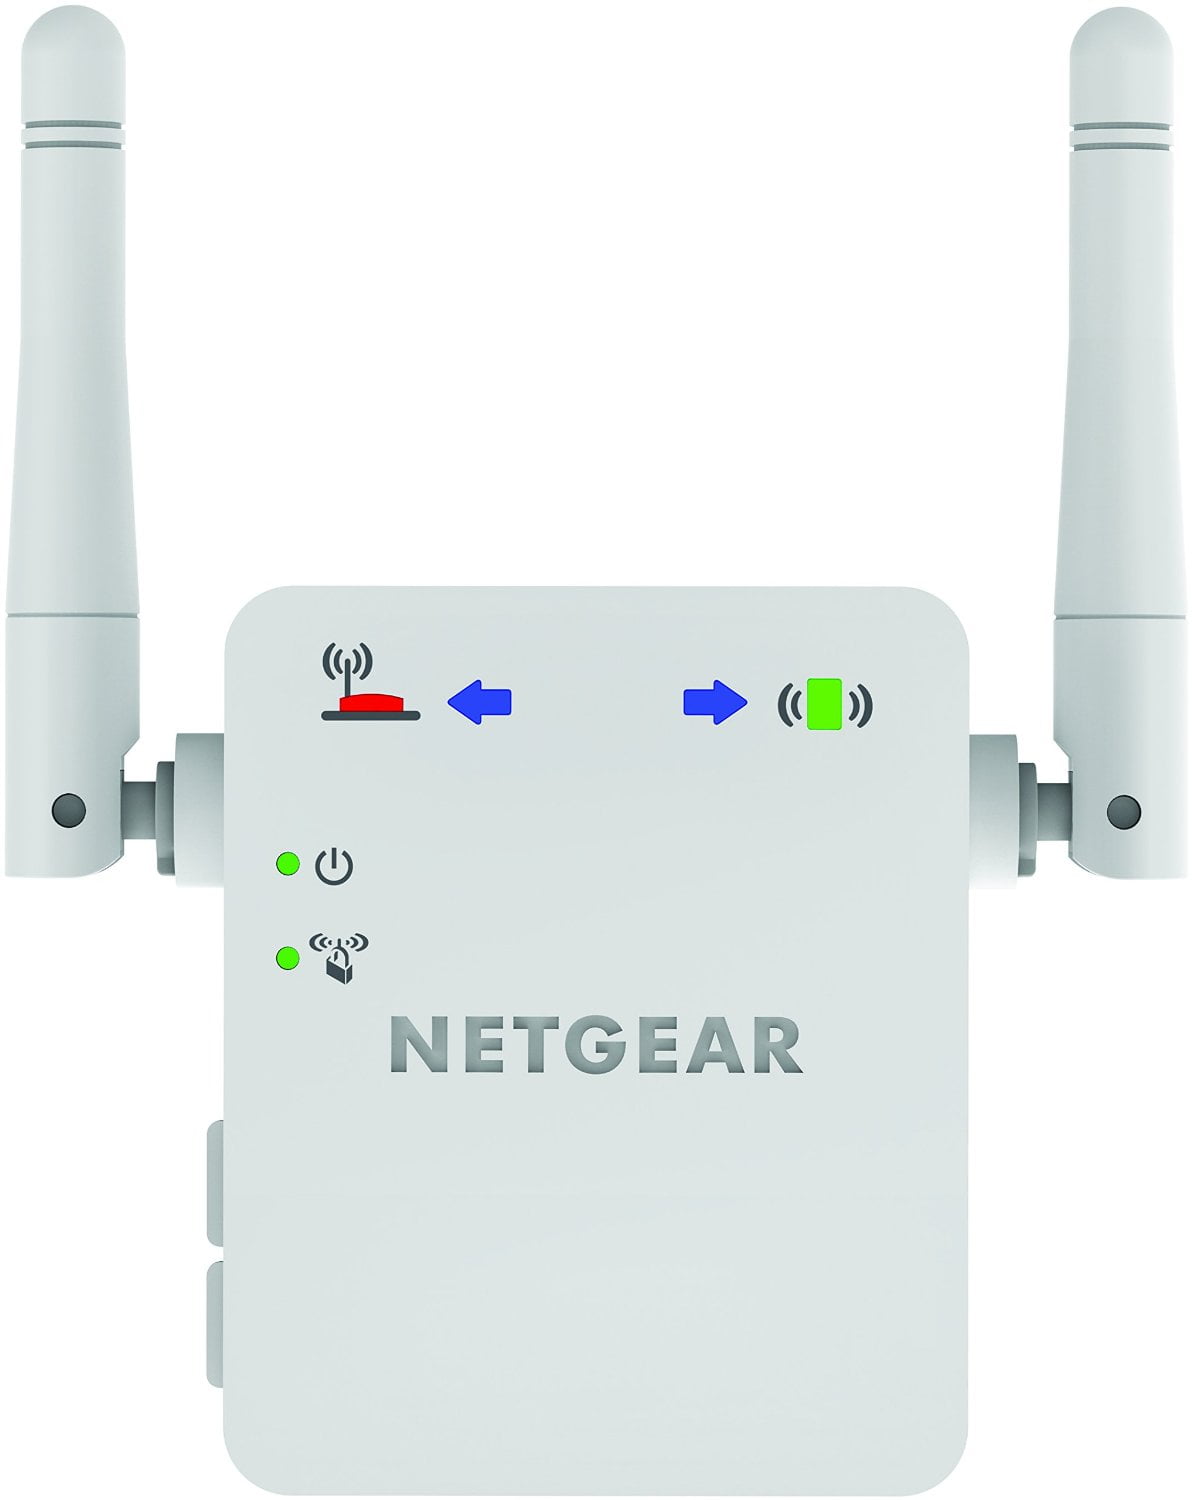 Netgear Universal Wifi Range Extender WN3000RP, White - Walmart.com